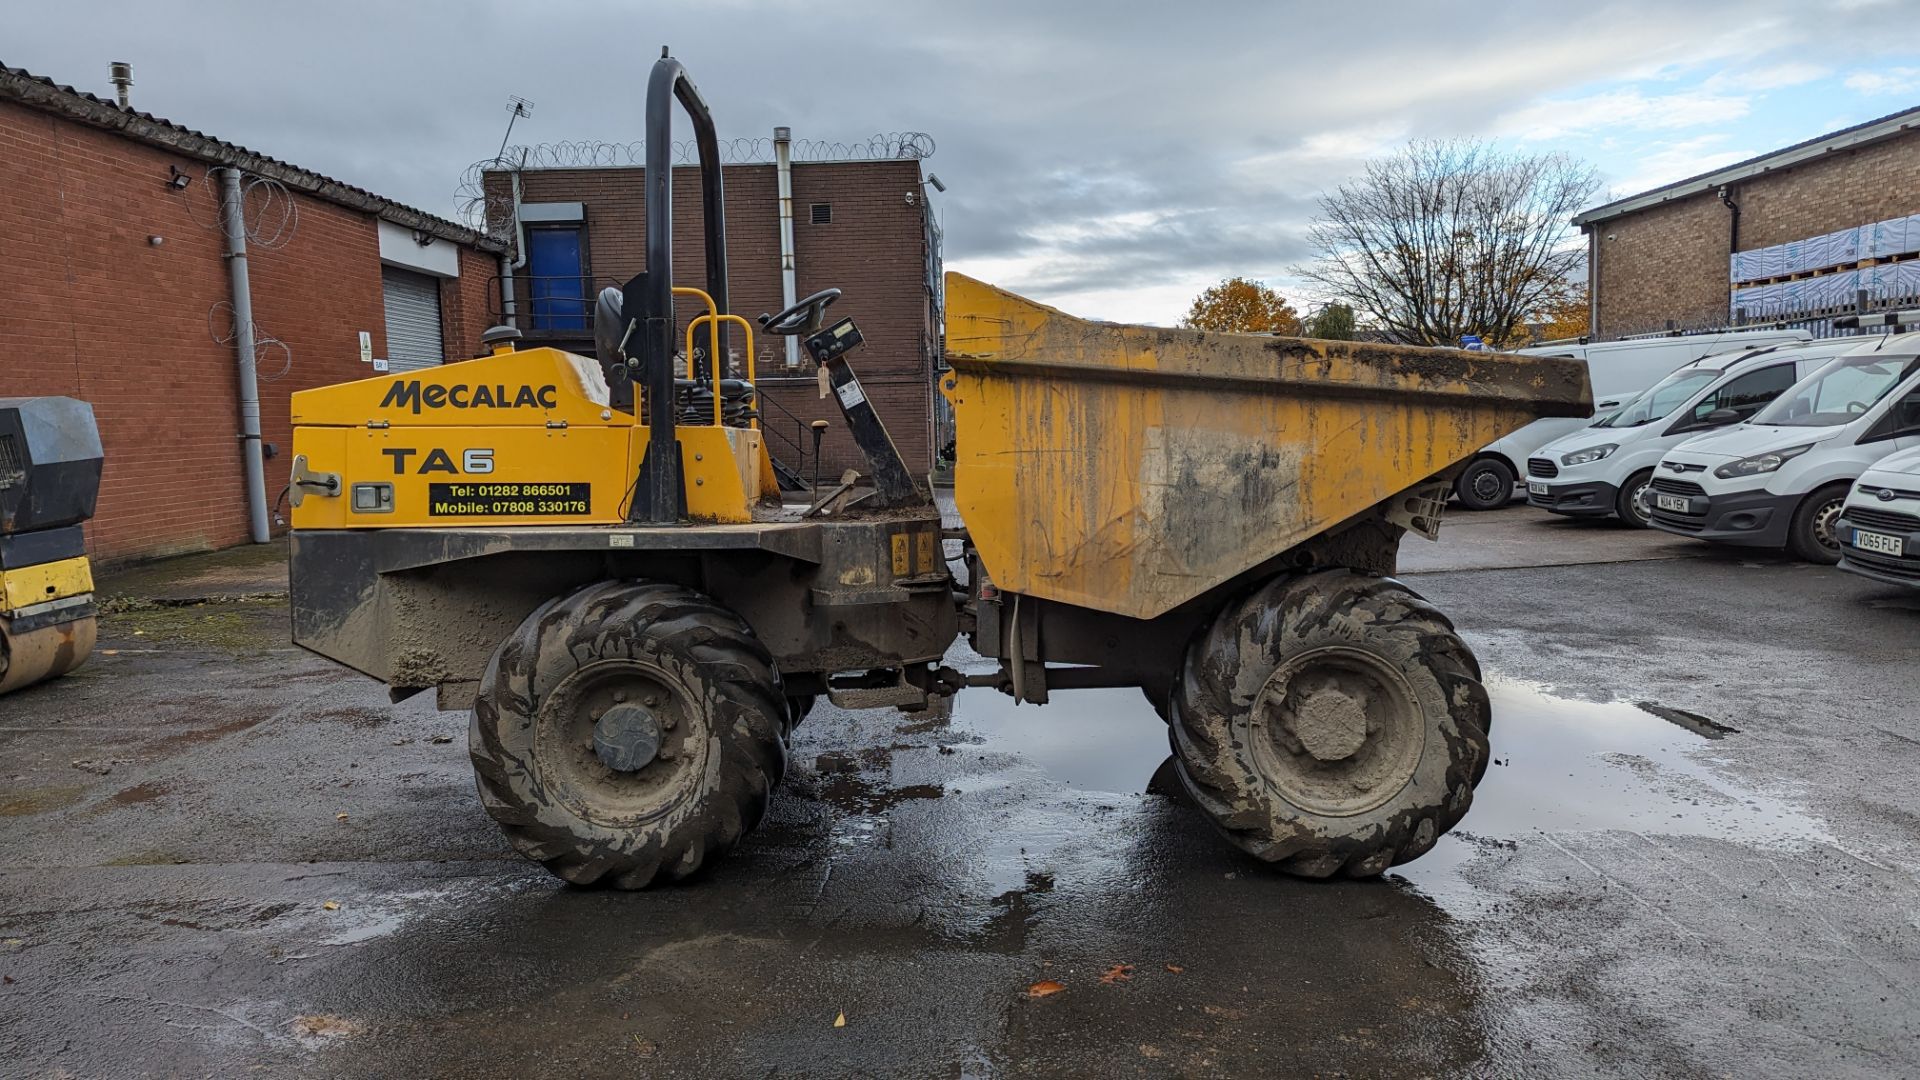 2018 Mecalac model TA6 dumper, 6 tonne capacity - Image 6 of 16